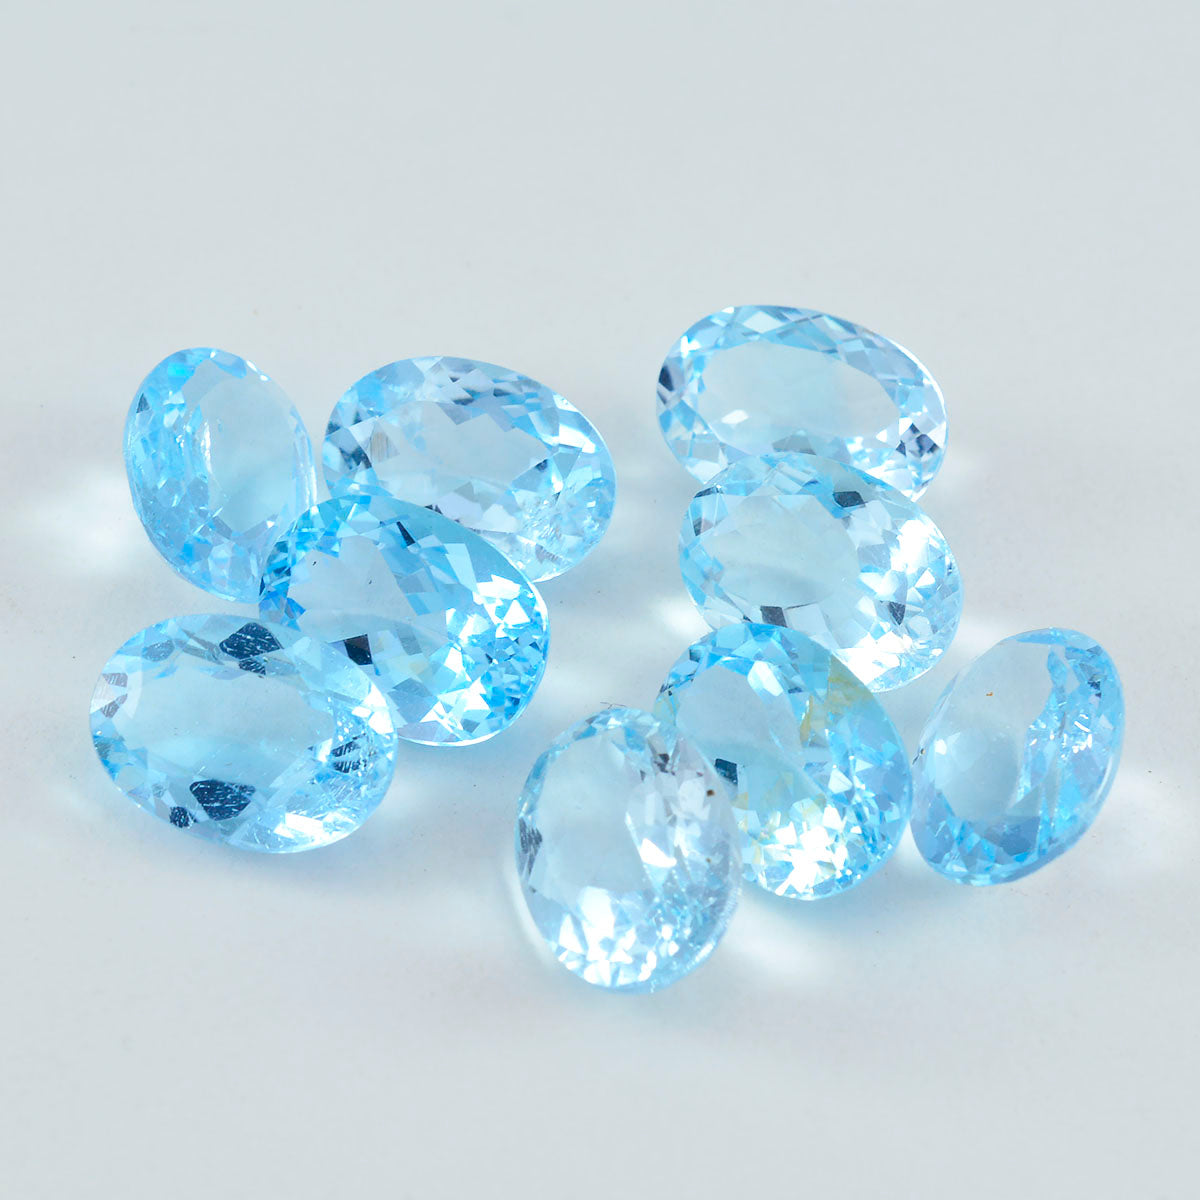 Riyogems 1PC Genuine Blue Topaz Faceted 8x10 mm Oval Shape Nice Quality Loose Gems